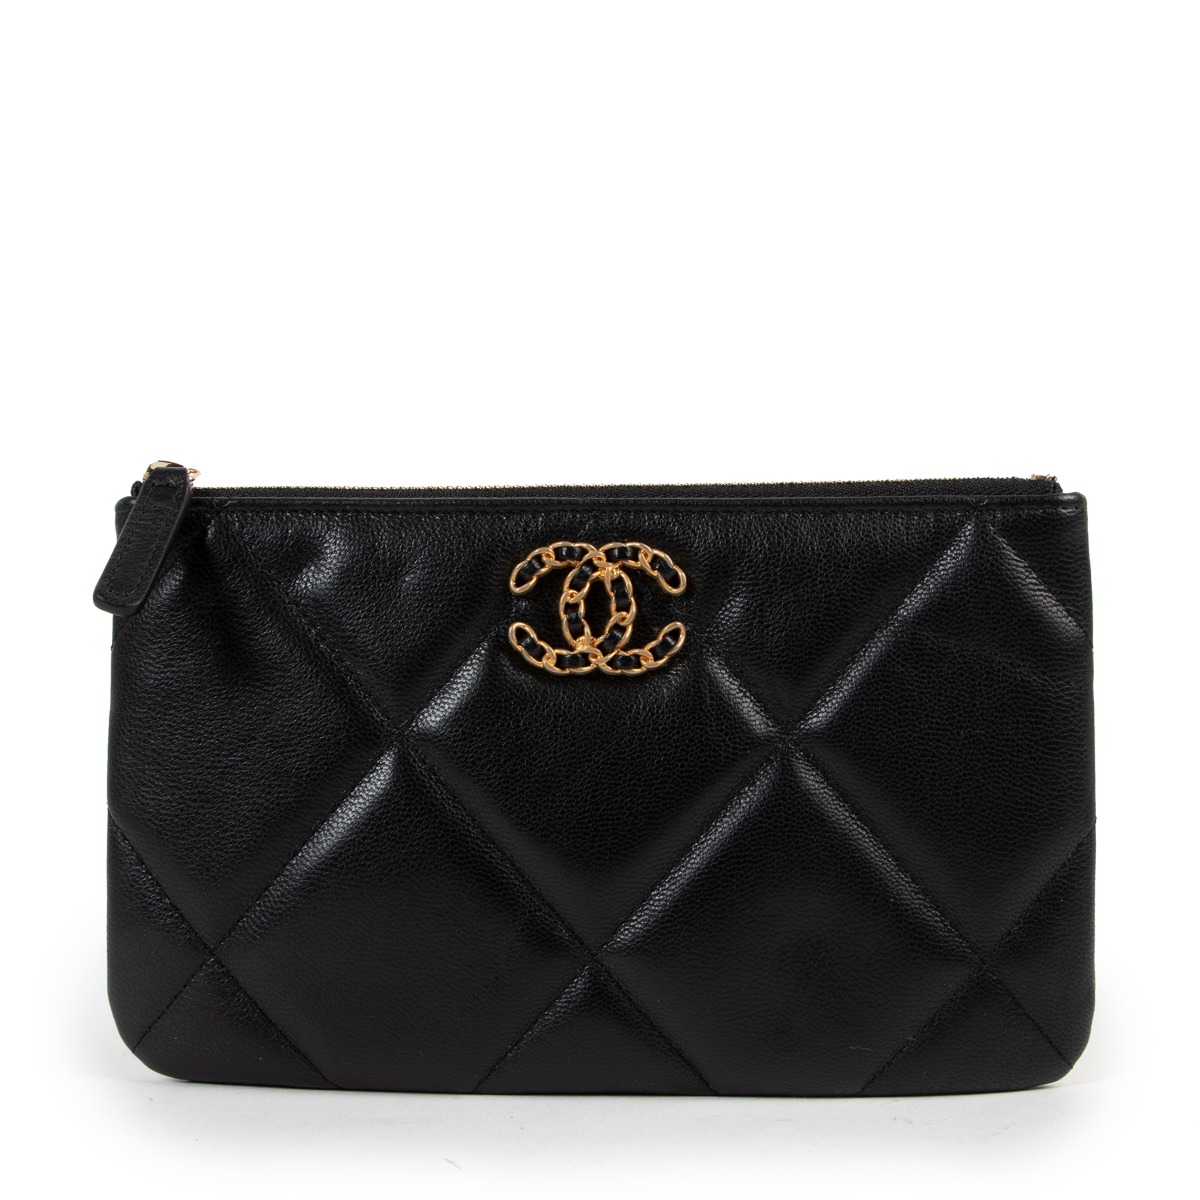 Chanel - Louis Vuitton, Sale n°2639, Lot n°117